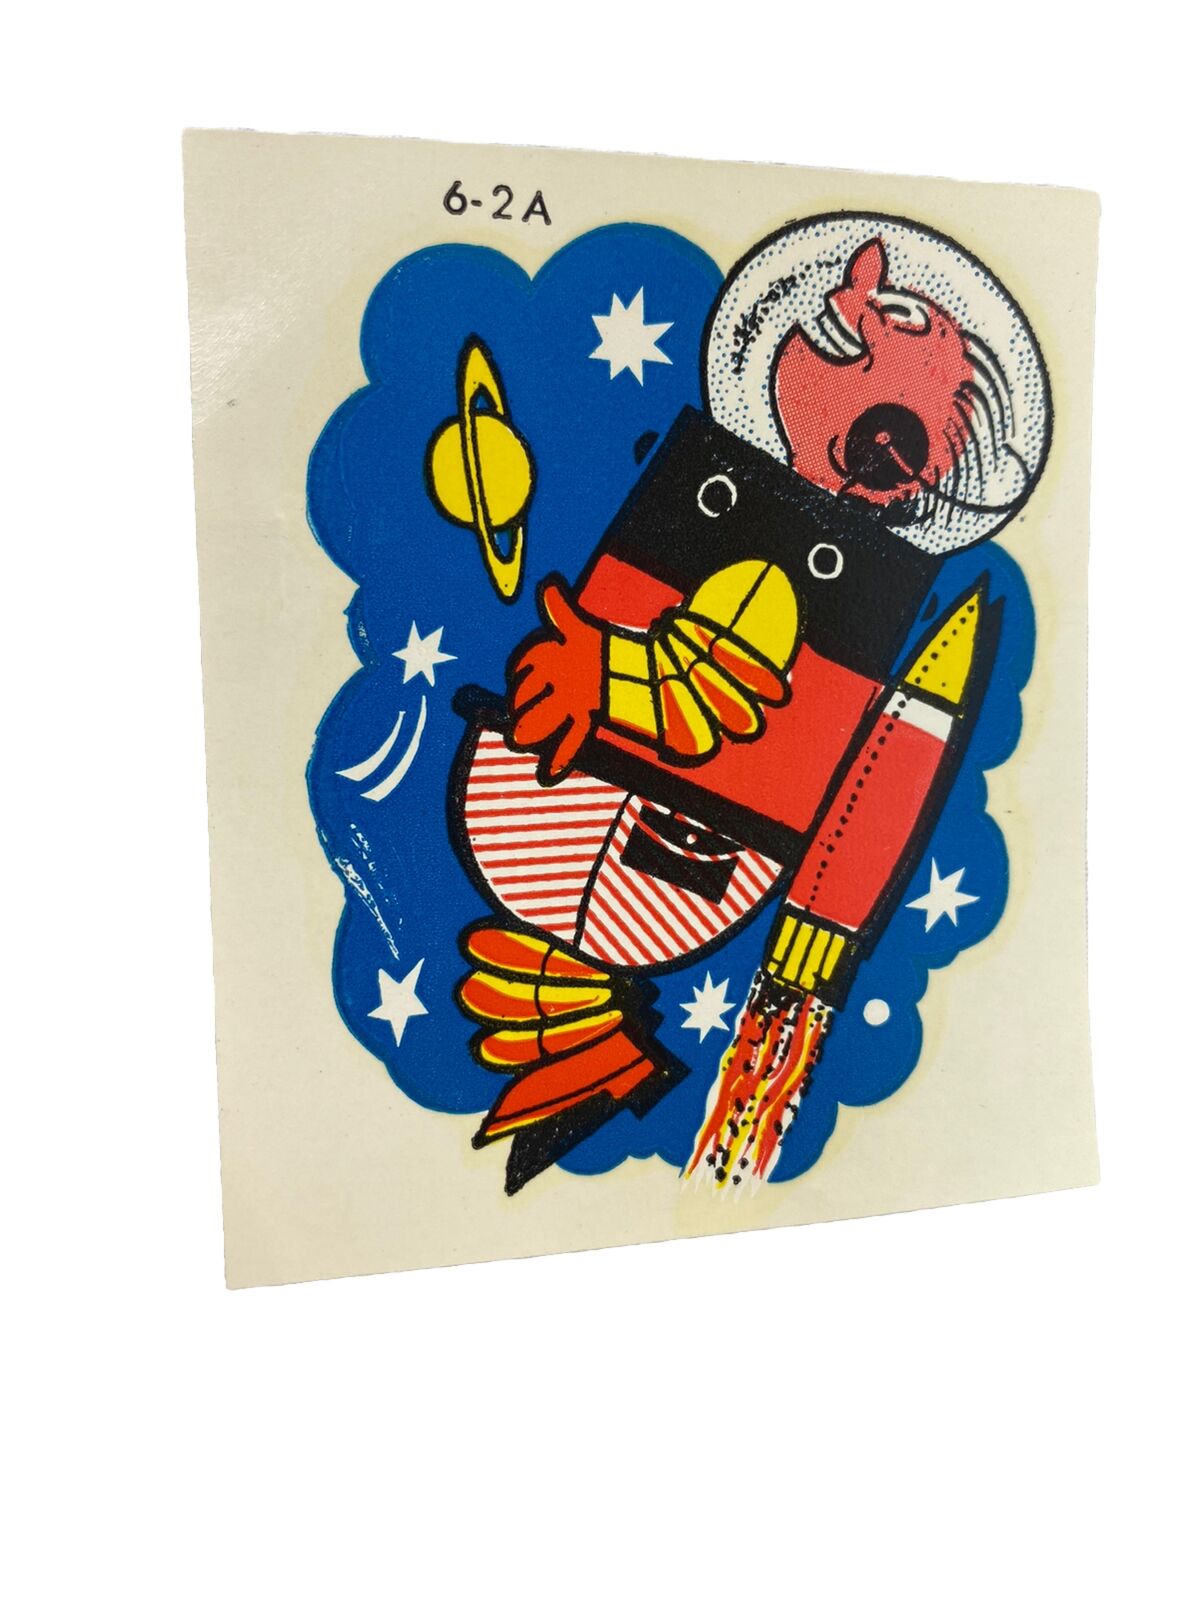 Vintage Impko Waterslide Decal Astronaut Spaceman 50s Rare Hot Rod Rocket Man